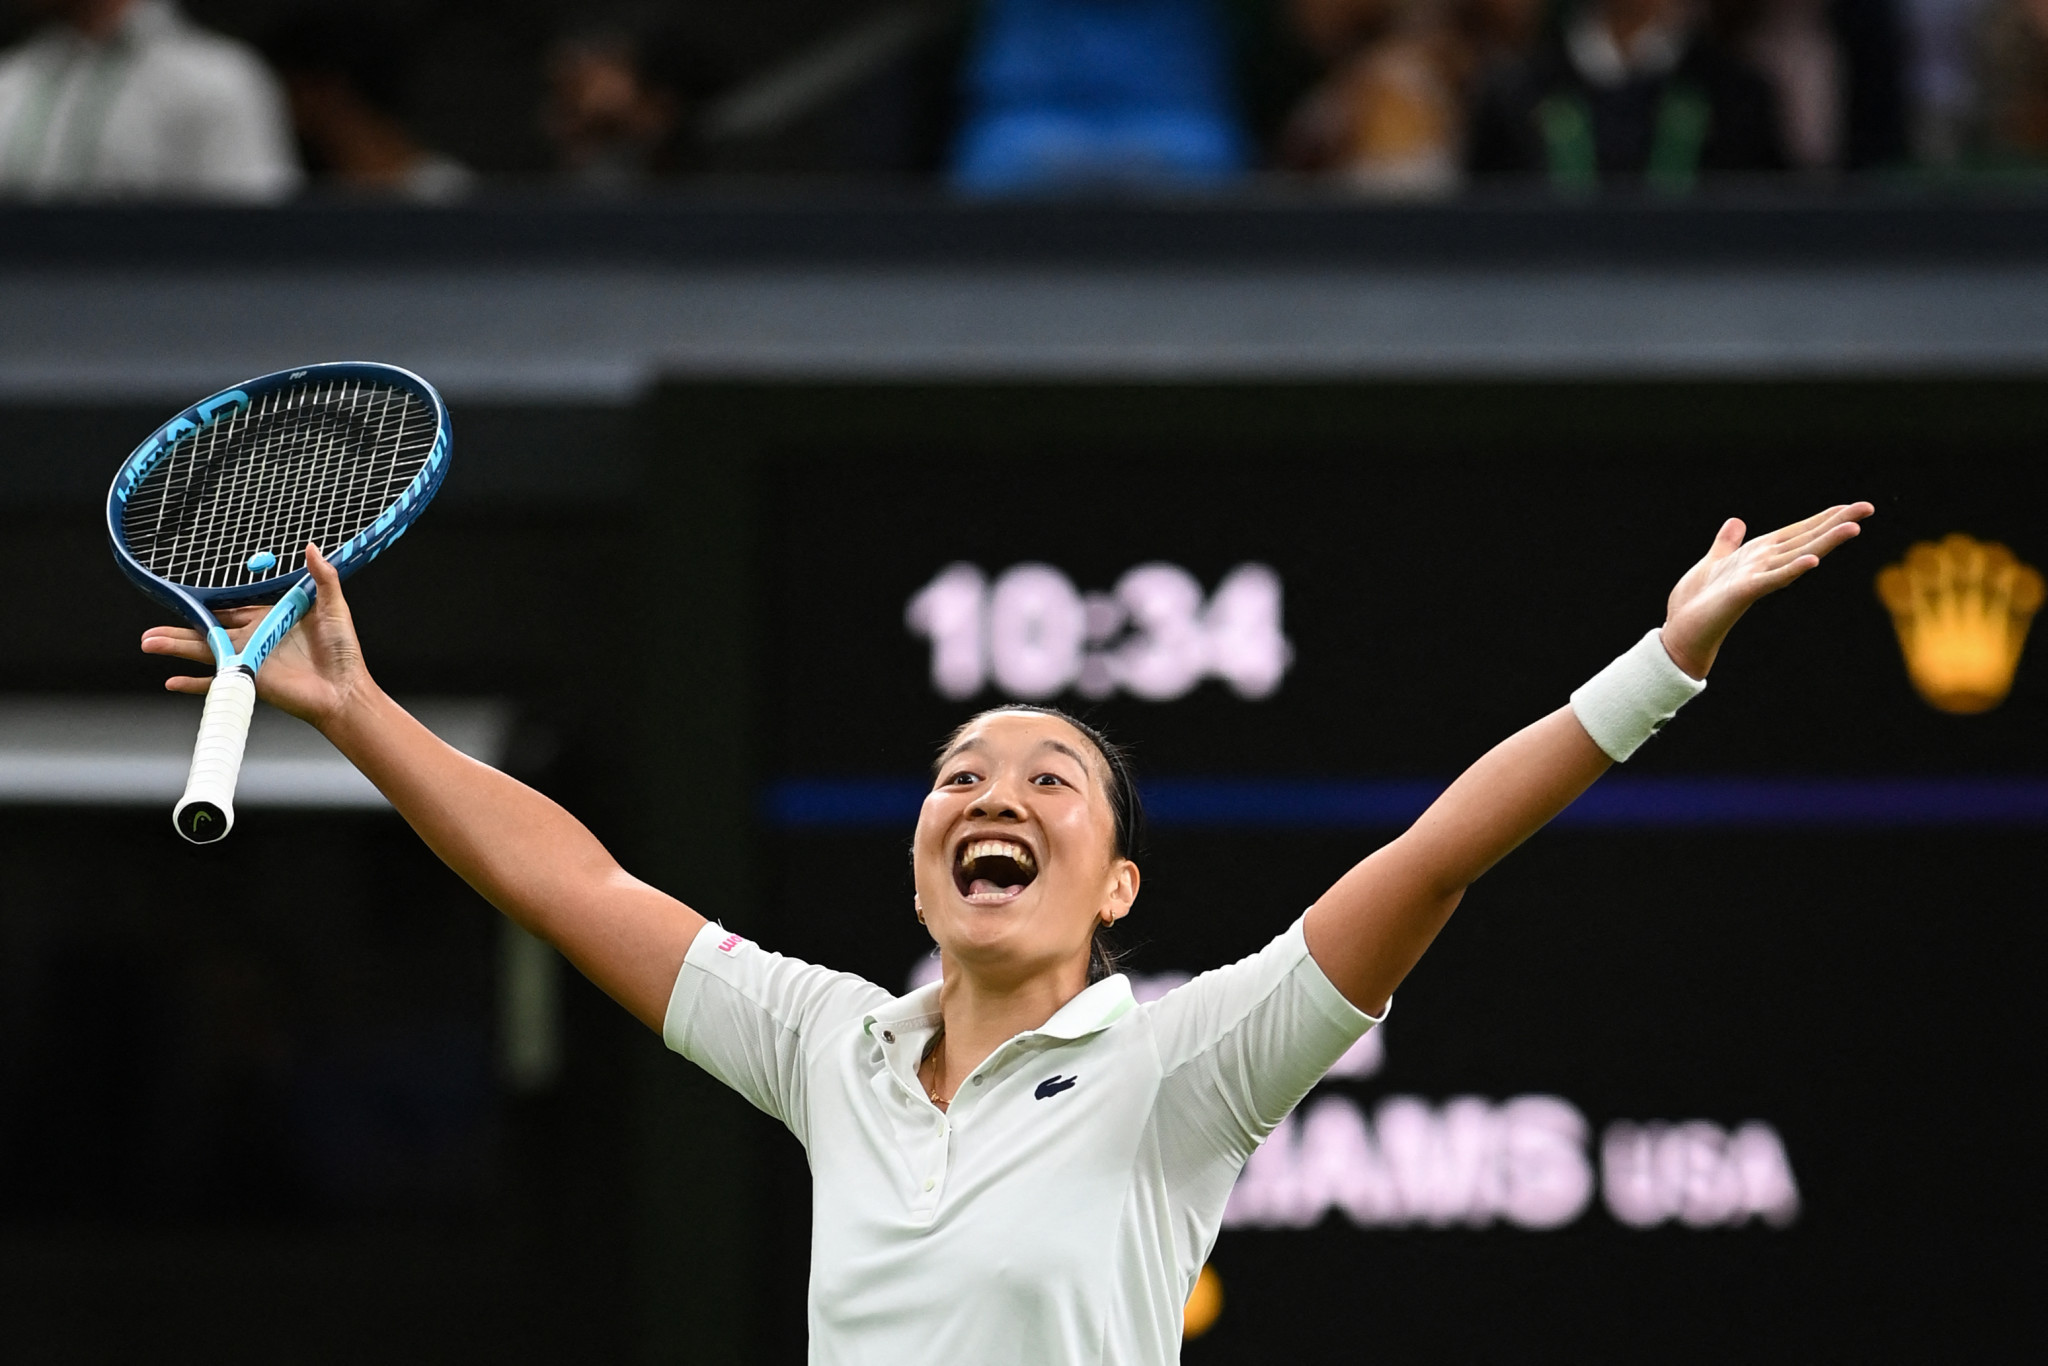 Tan eliminates Williams in Wimbledon epic and Świątek stretches win streak to 36 matches